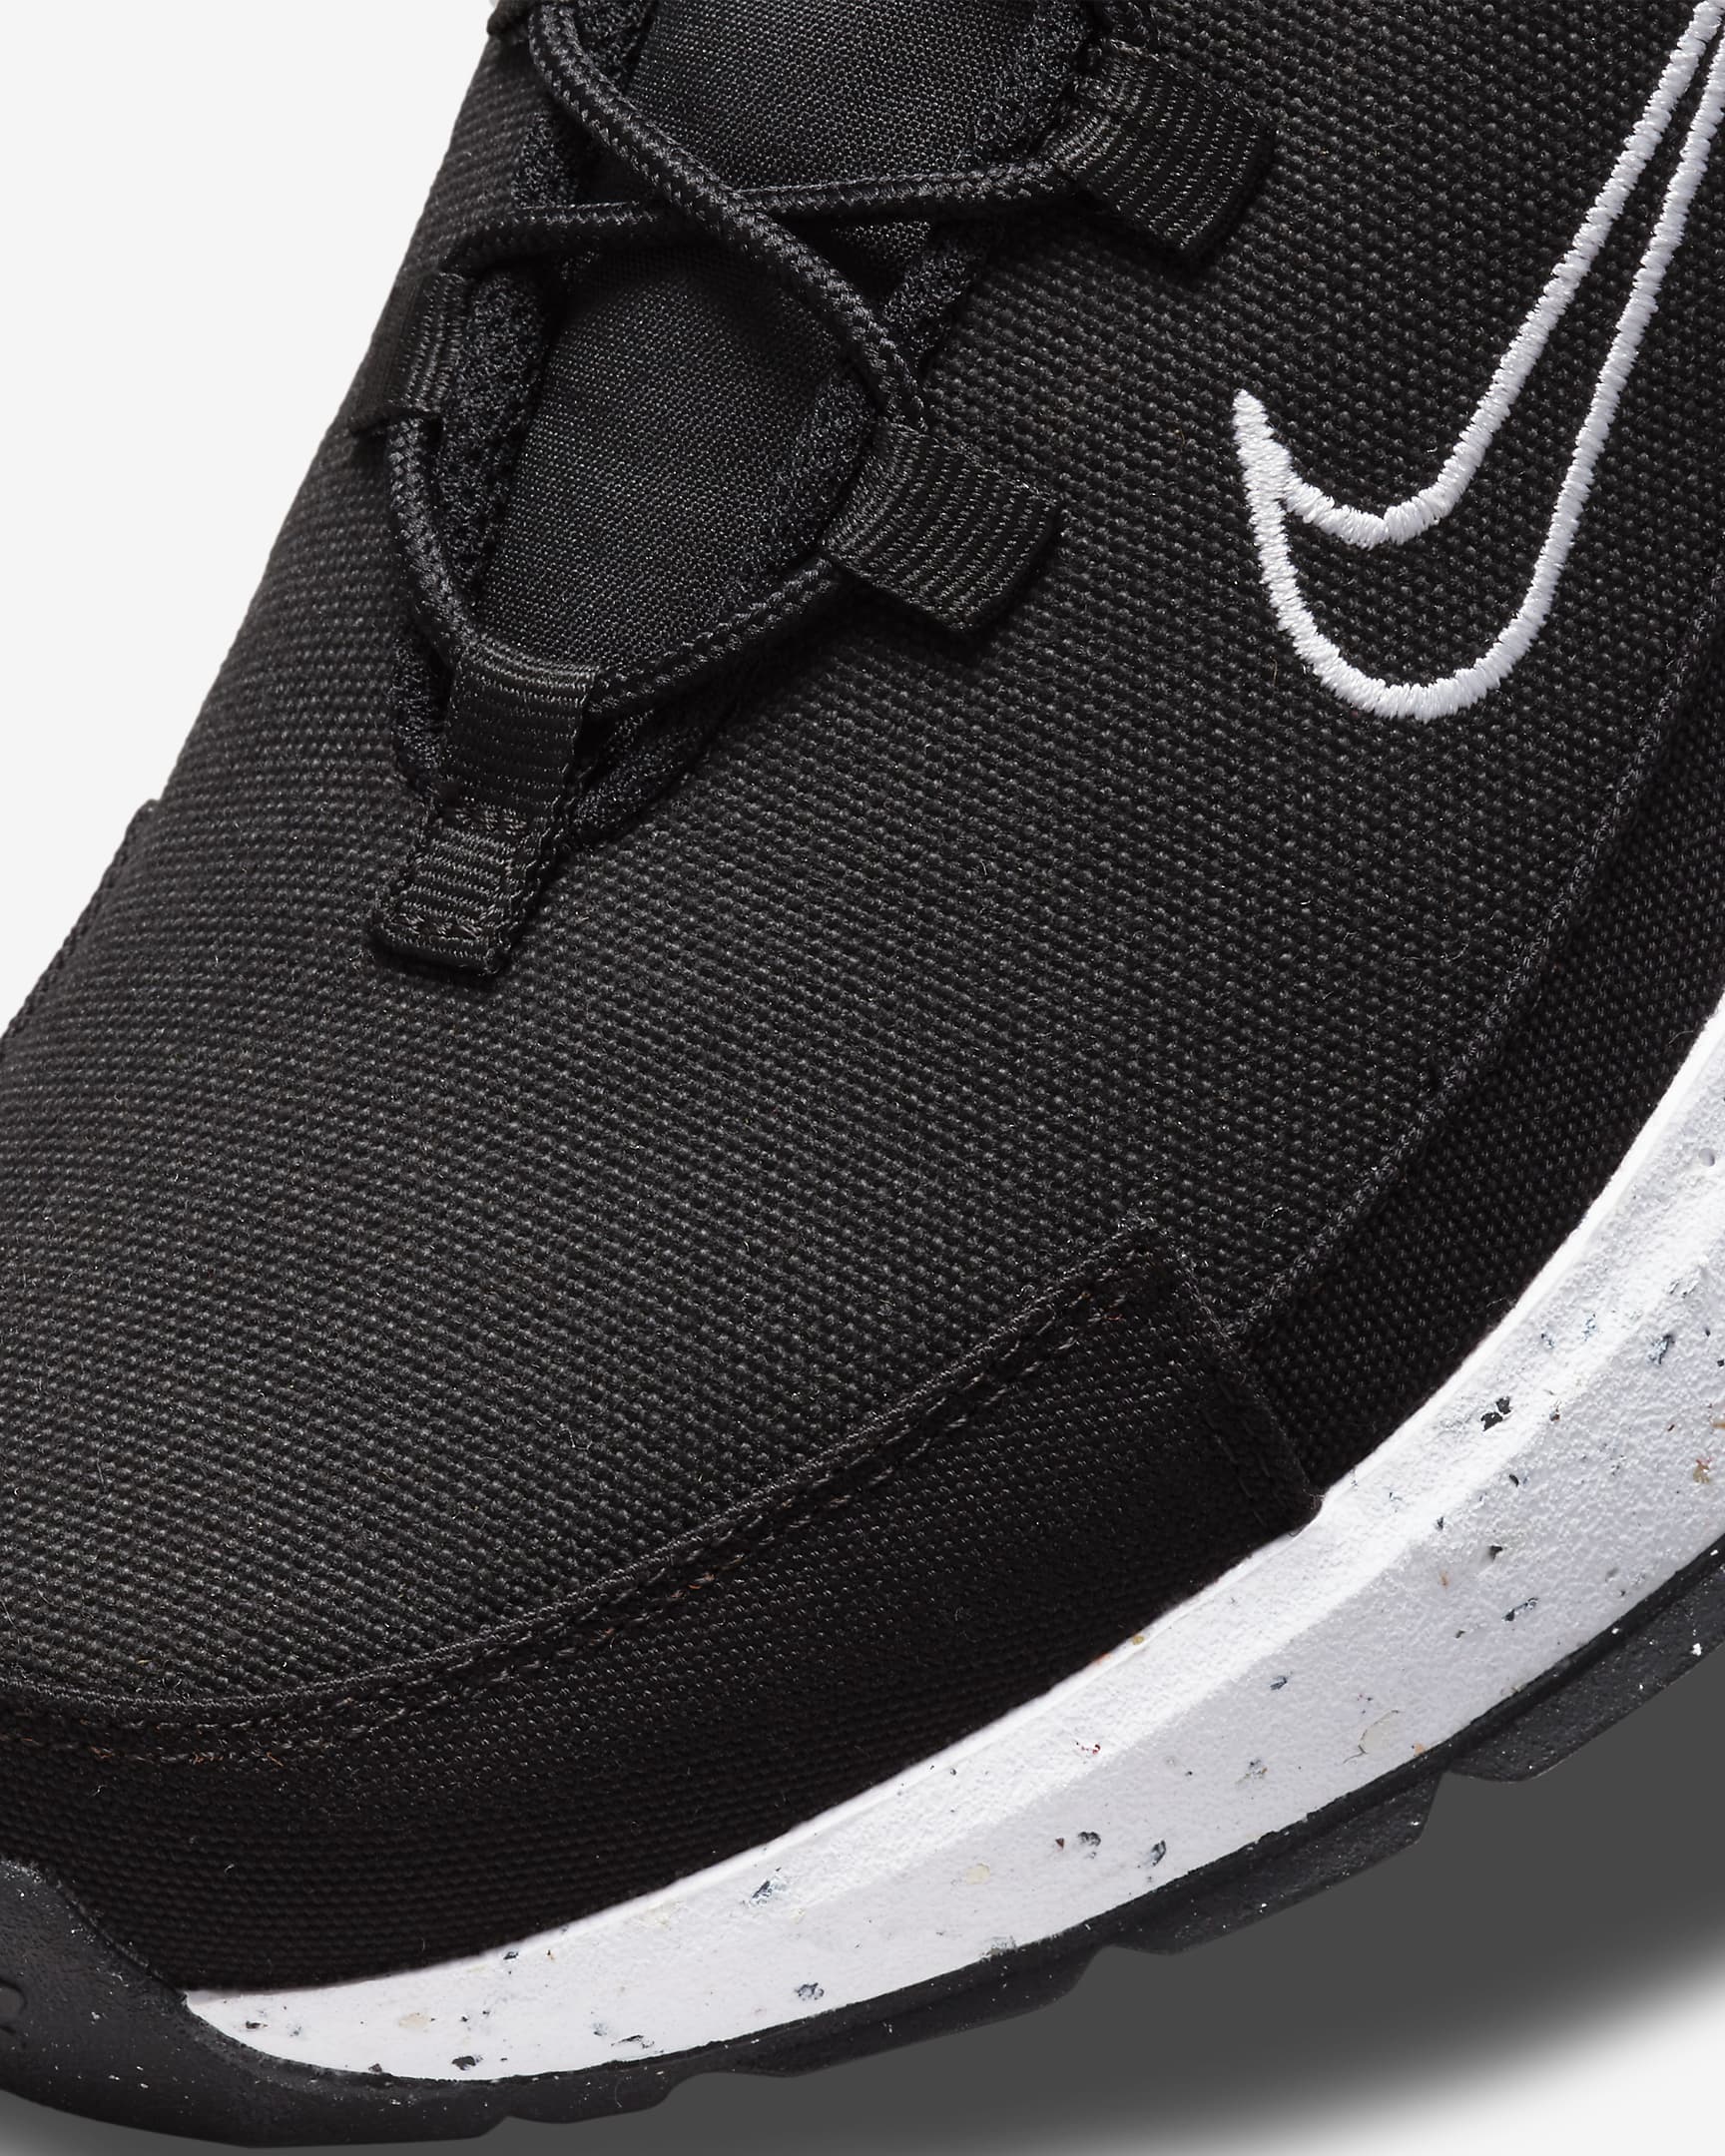 Nike Crater Remixa Men's Shoes. Nike BG